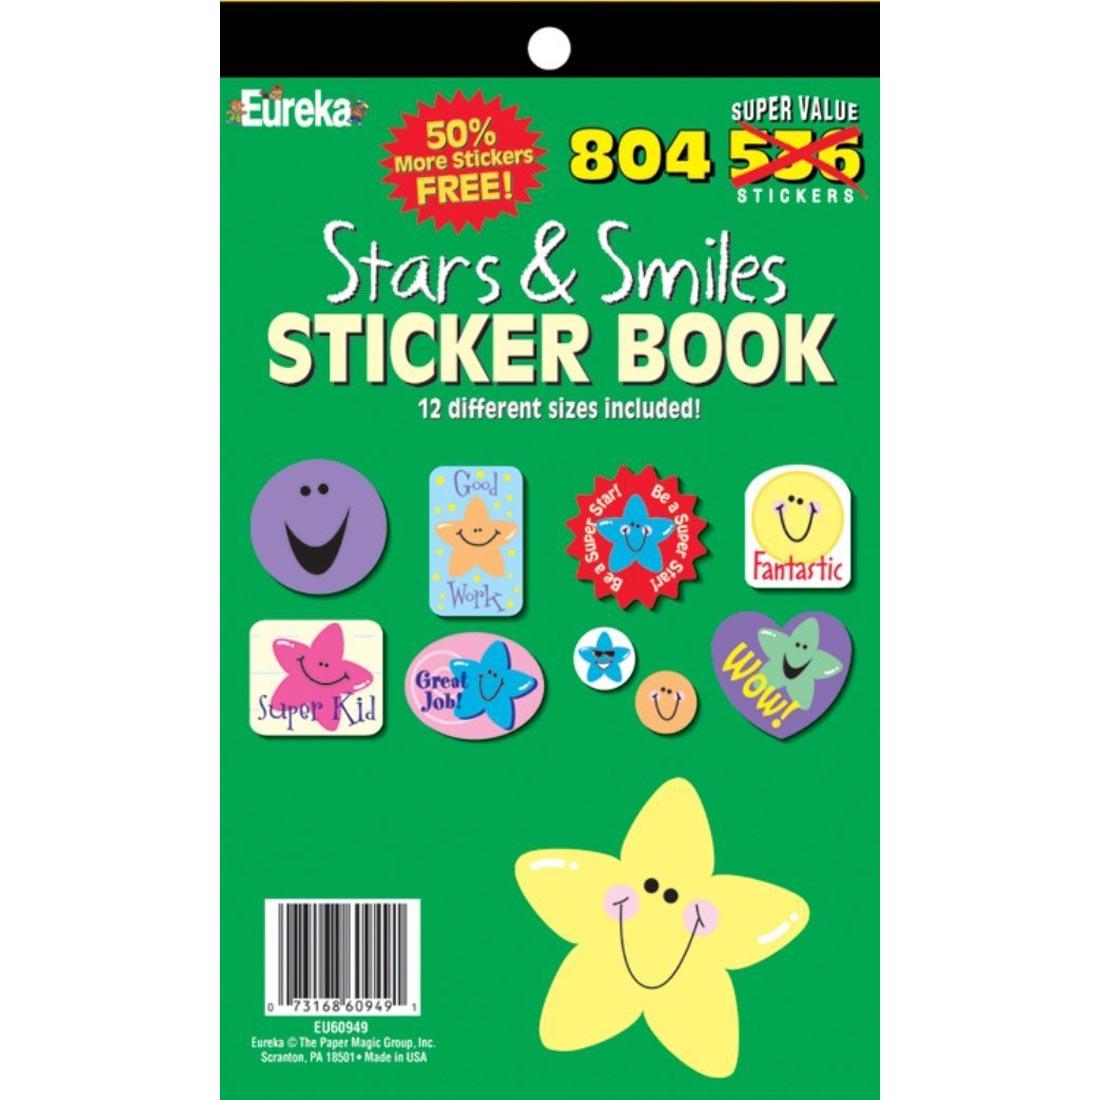 Stars & Smiles Sticker Book by Eureka